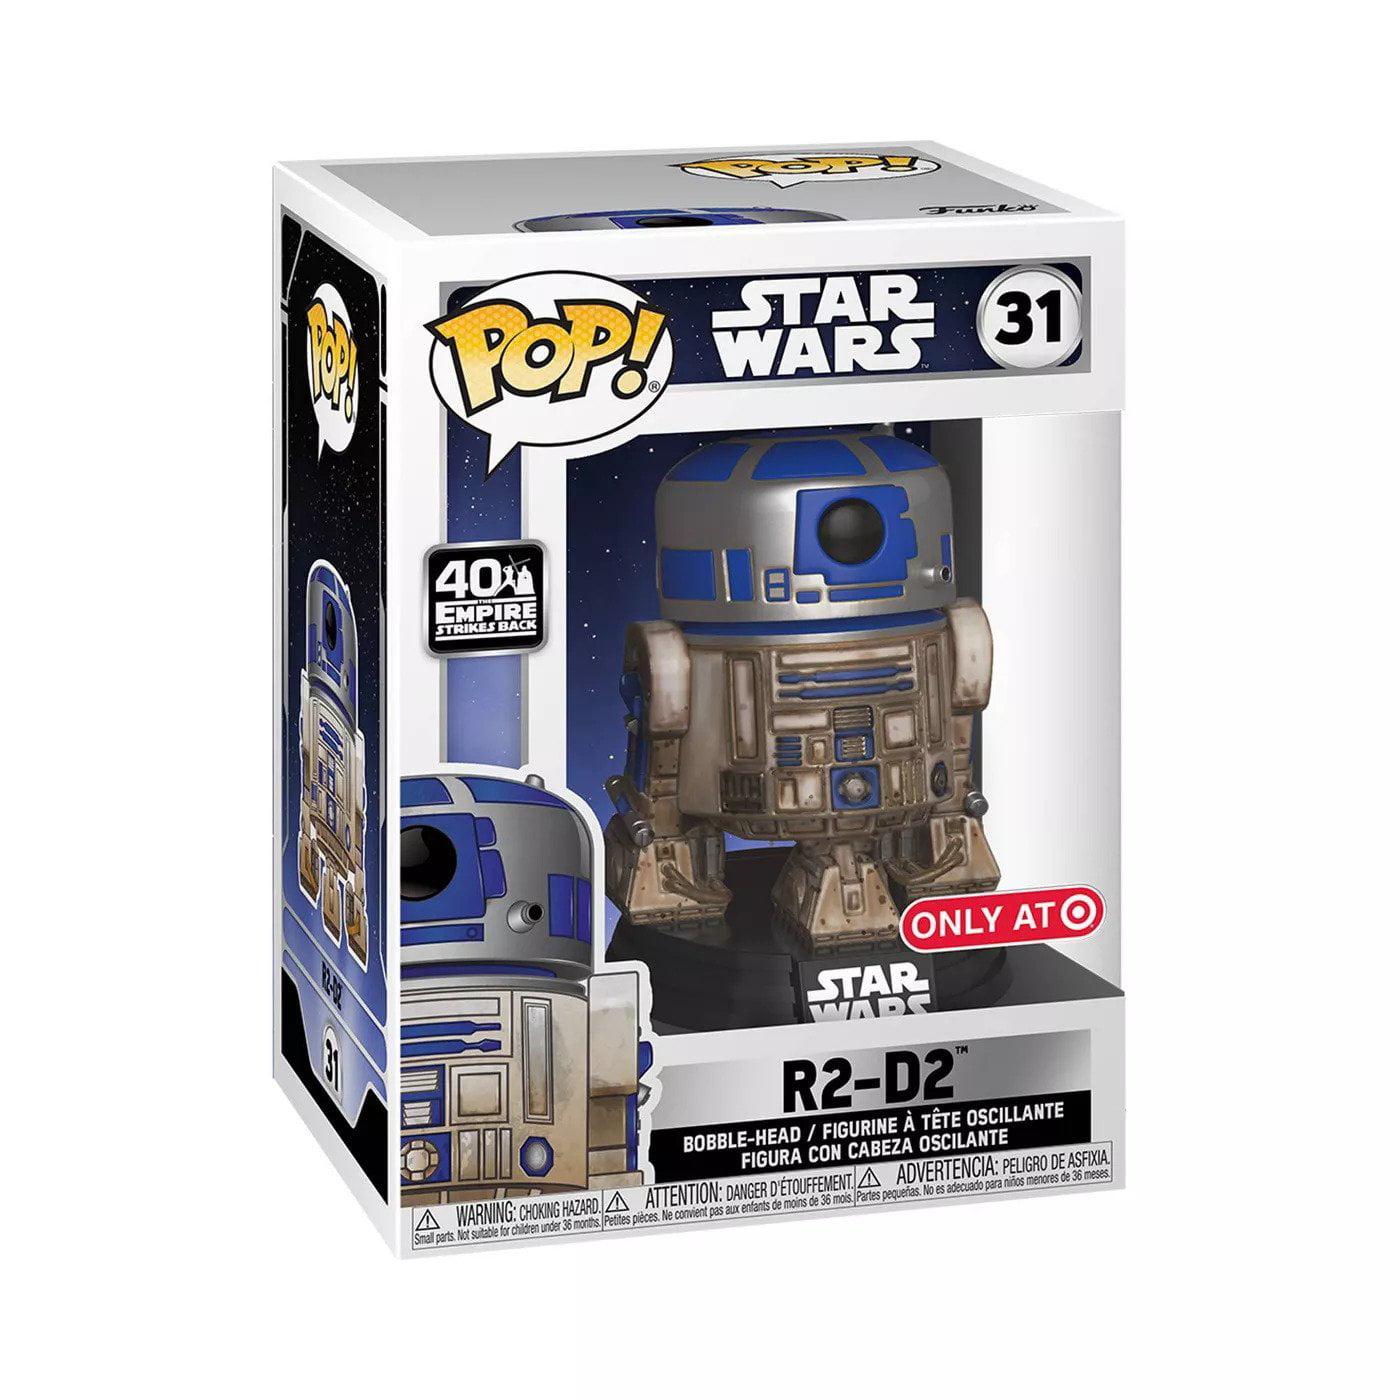 Star Wars R2-D2 * 40th Anniversary Empire Strikes Back Vintage Series Dagobah 